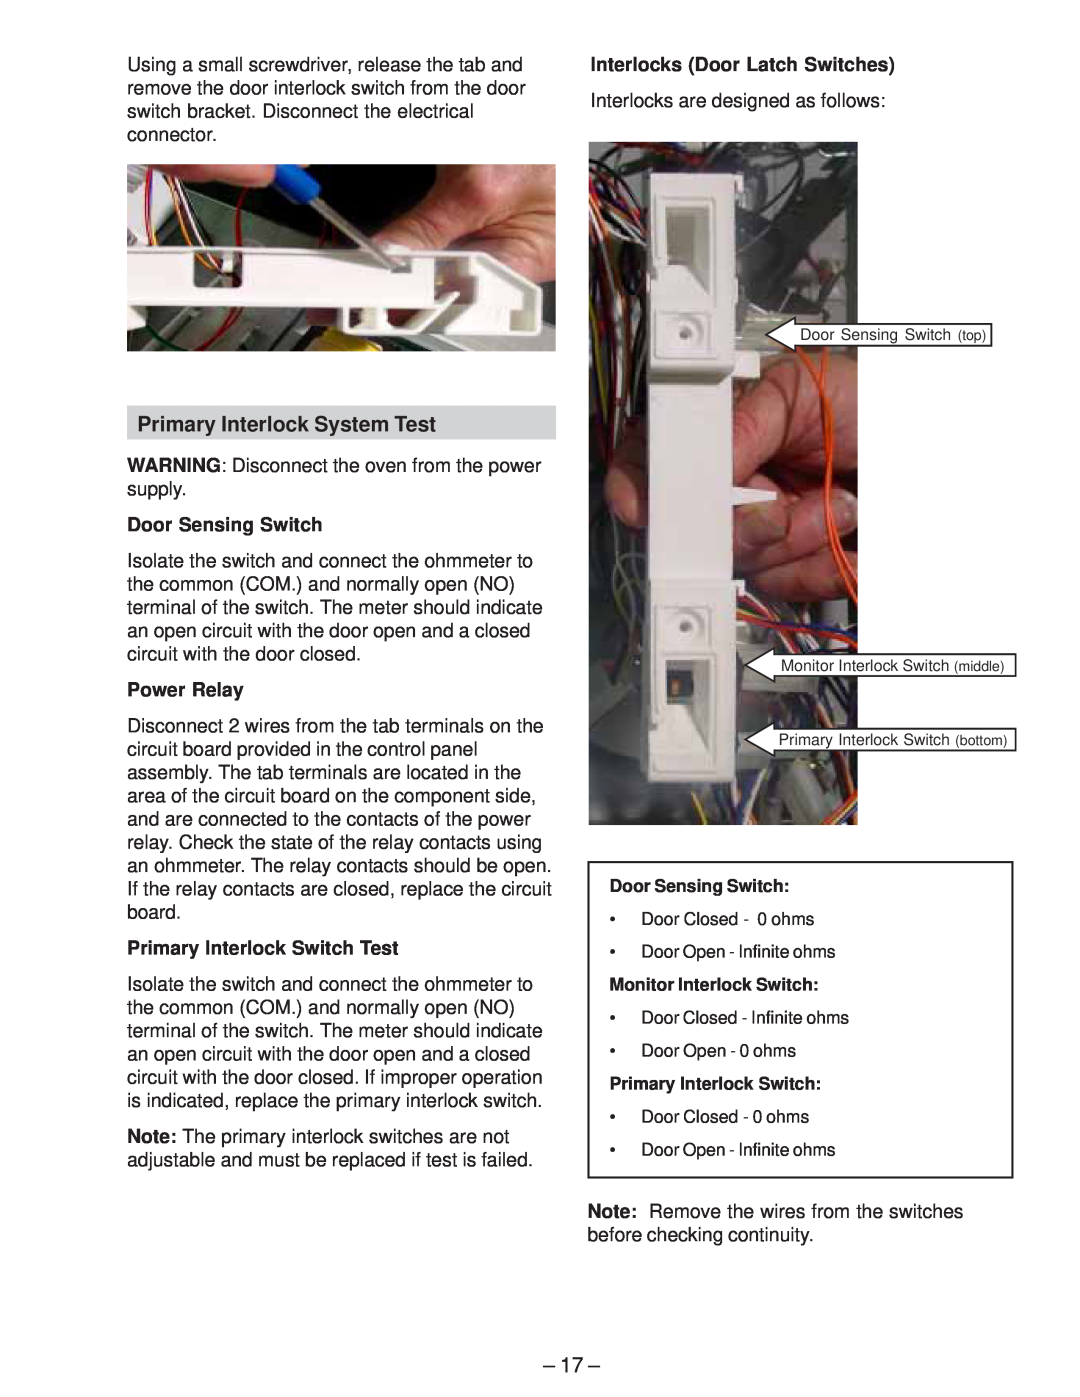 GE JVM2070_H manual Primary Interlock System Test, Interlocks Door Latch Switches, Door Sensing Switch, Power Relay 